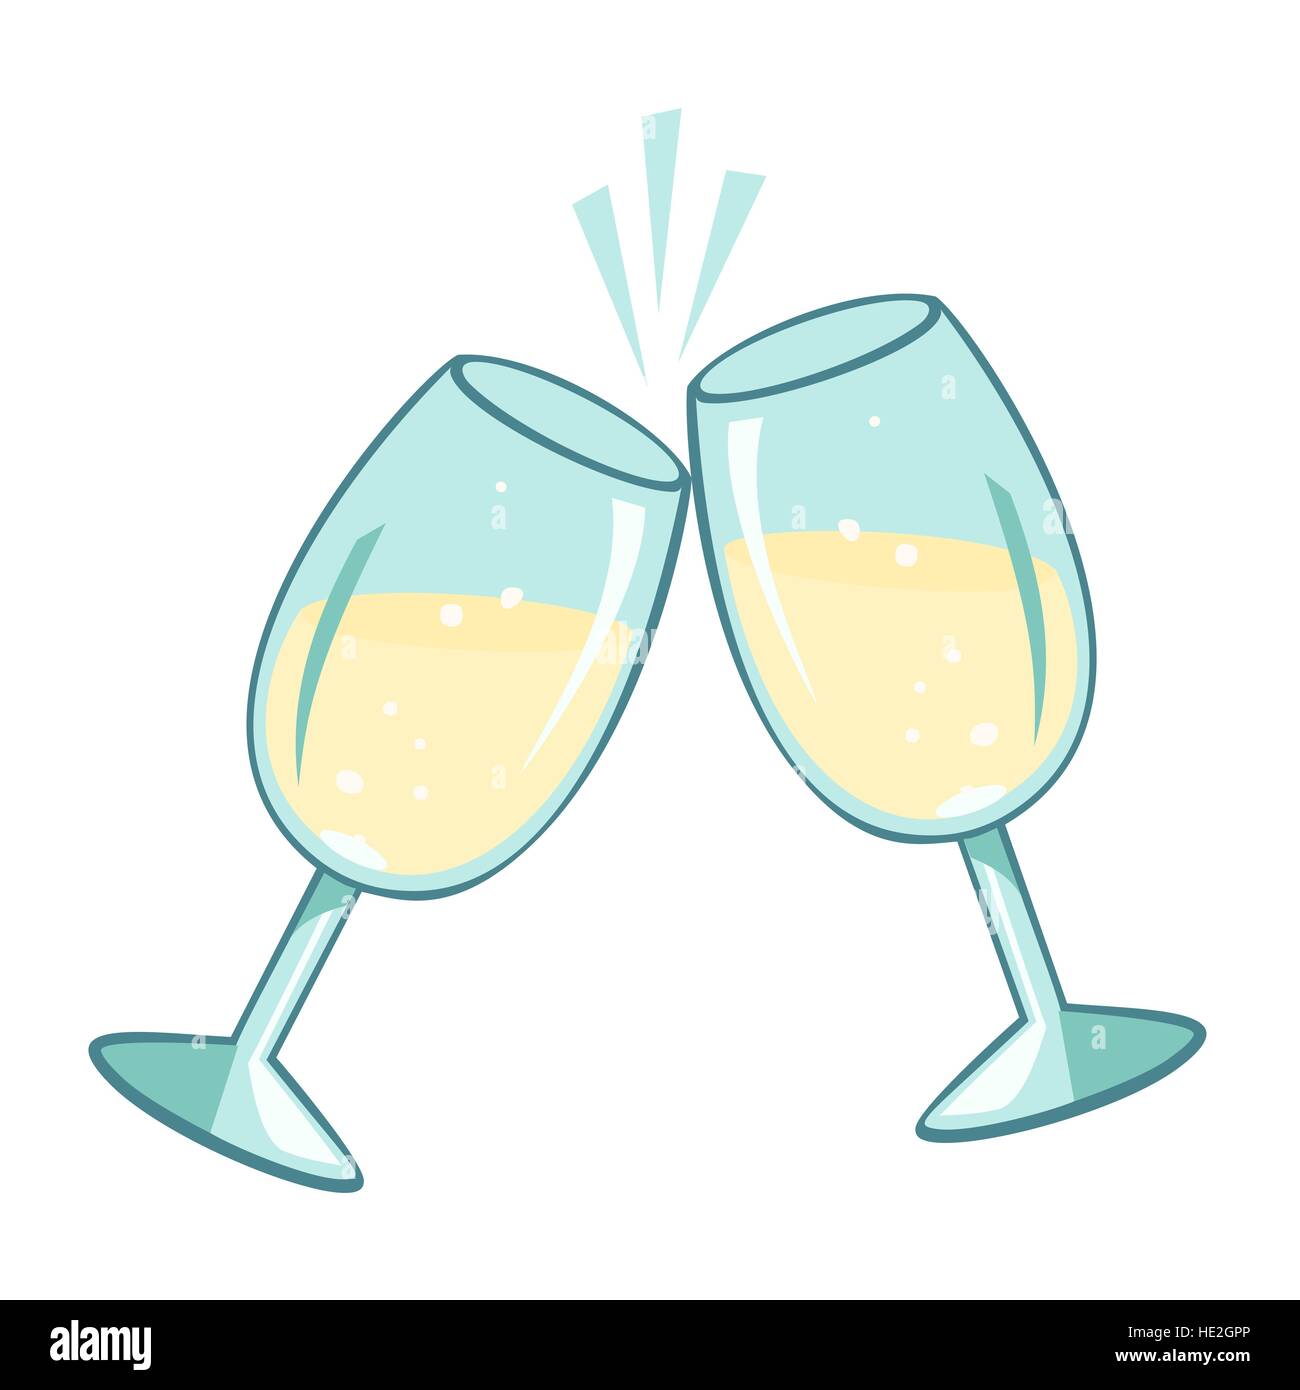 https://c8.alamy.com/comp/HE2GPP/sparkling-pair-champagne-glasses-vector-illustration-isolated-on-white-HE2GPP.jpg